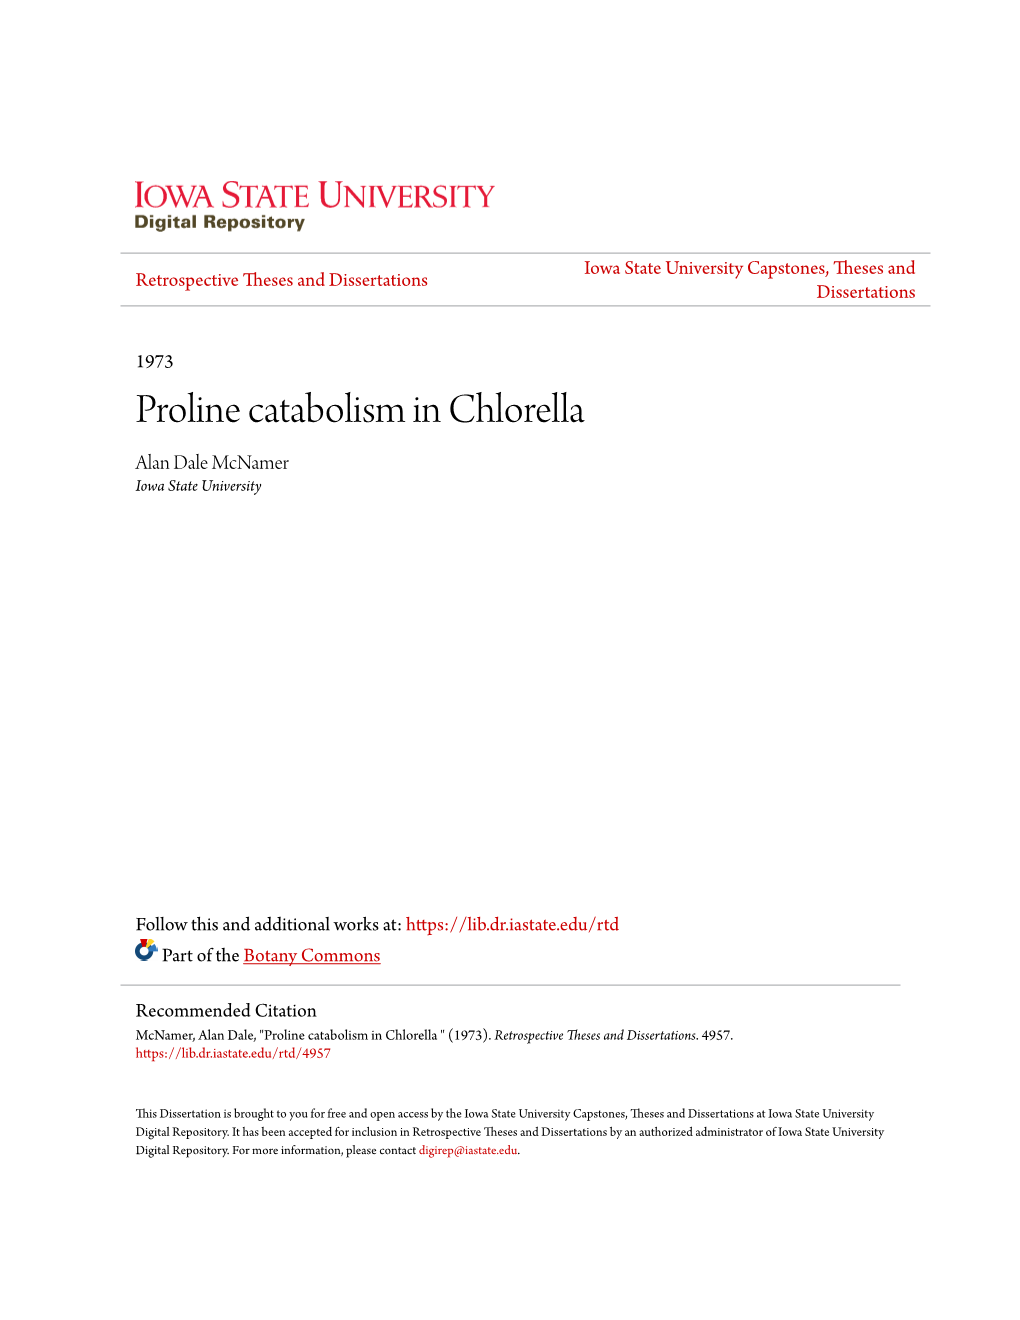 Proline Catabolism in Chlorella Alan Dale Mcnamer Iowa State University